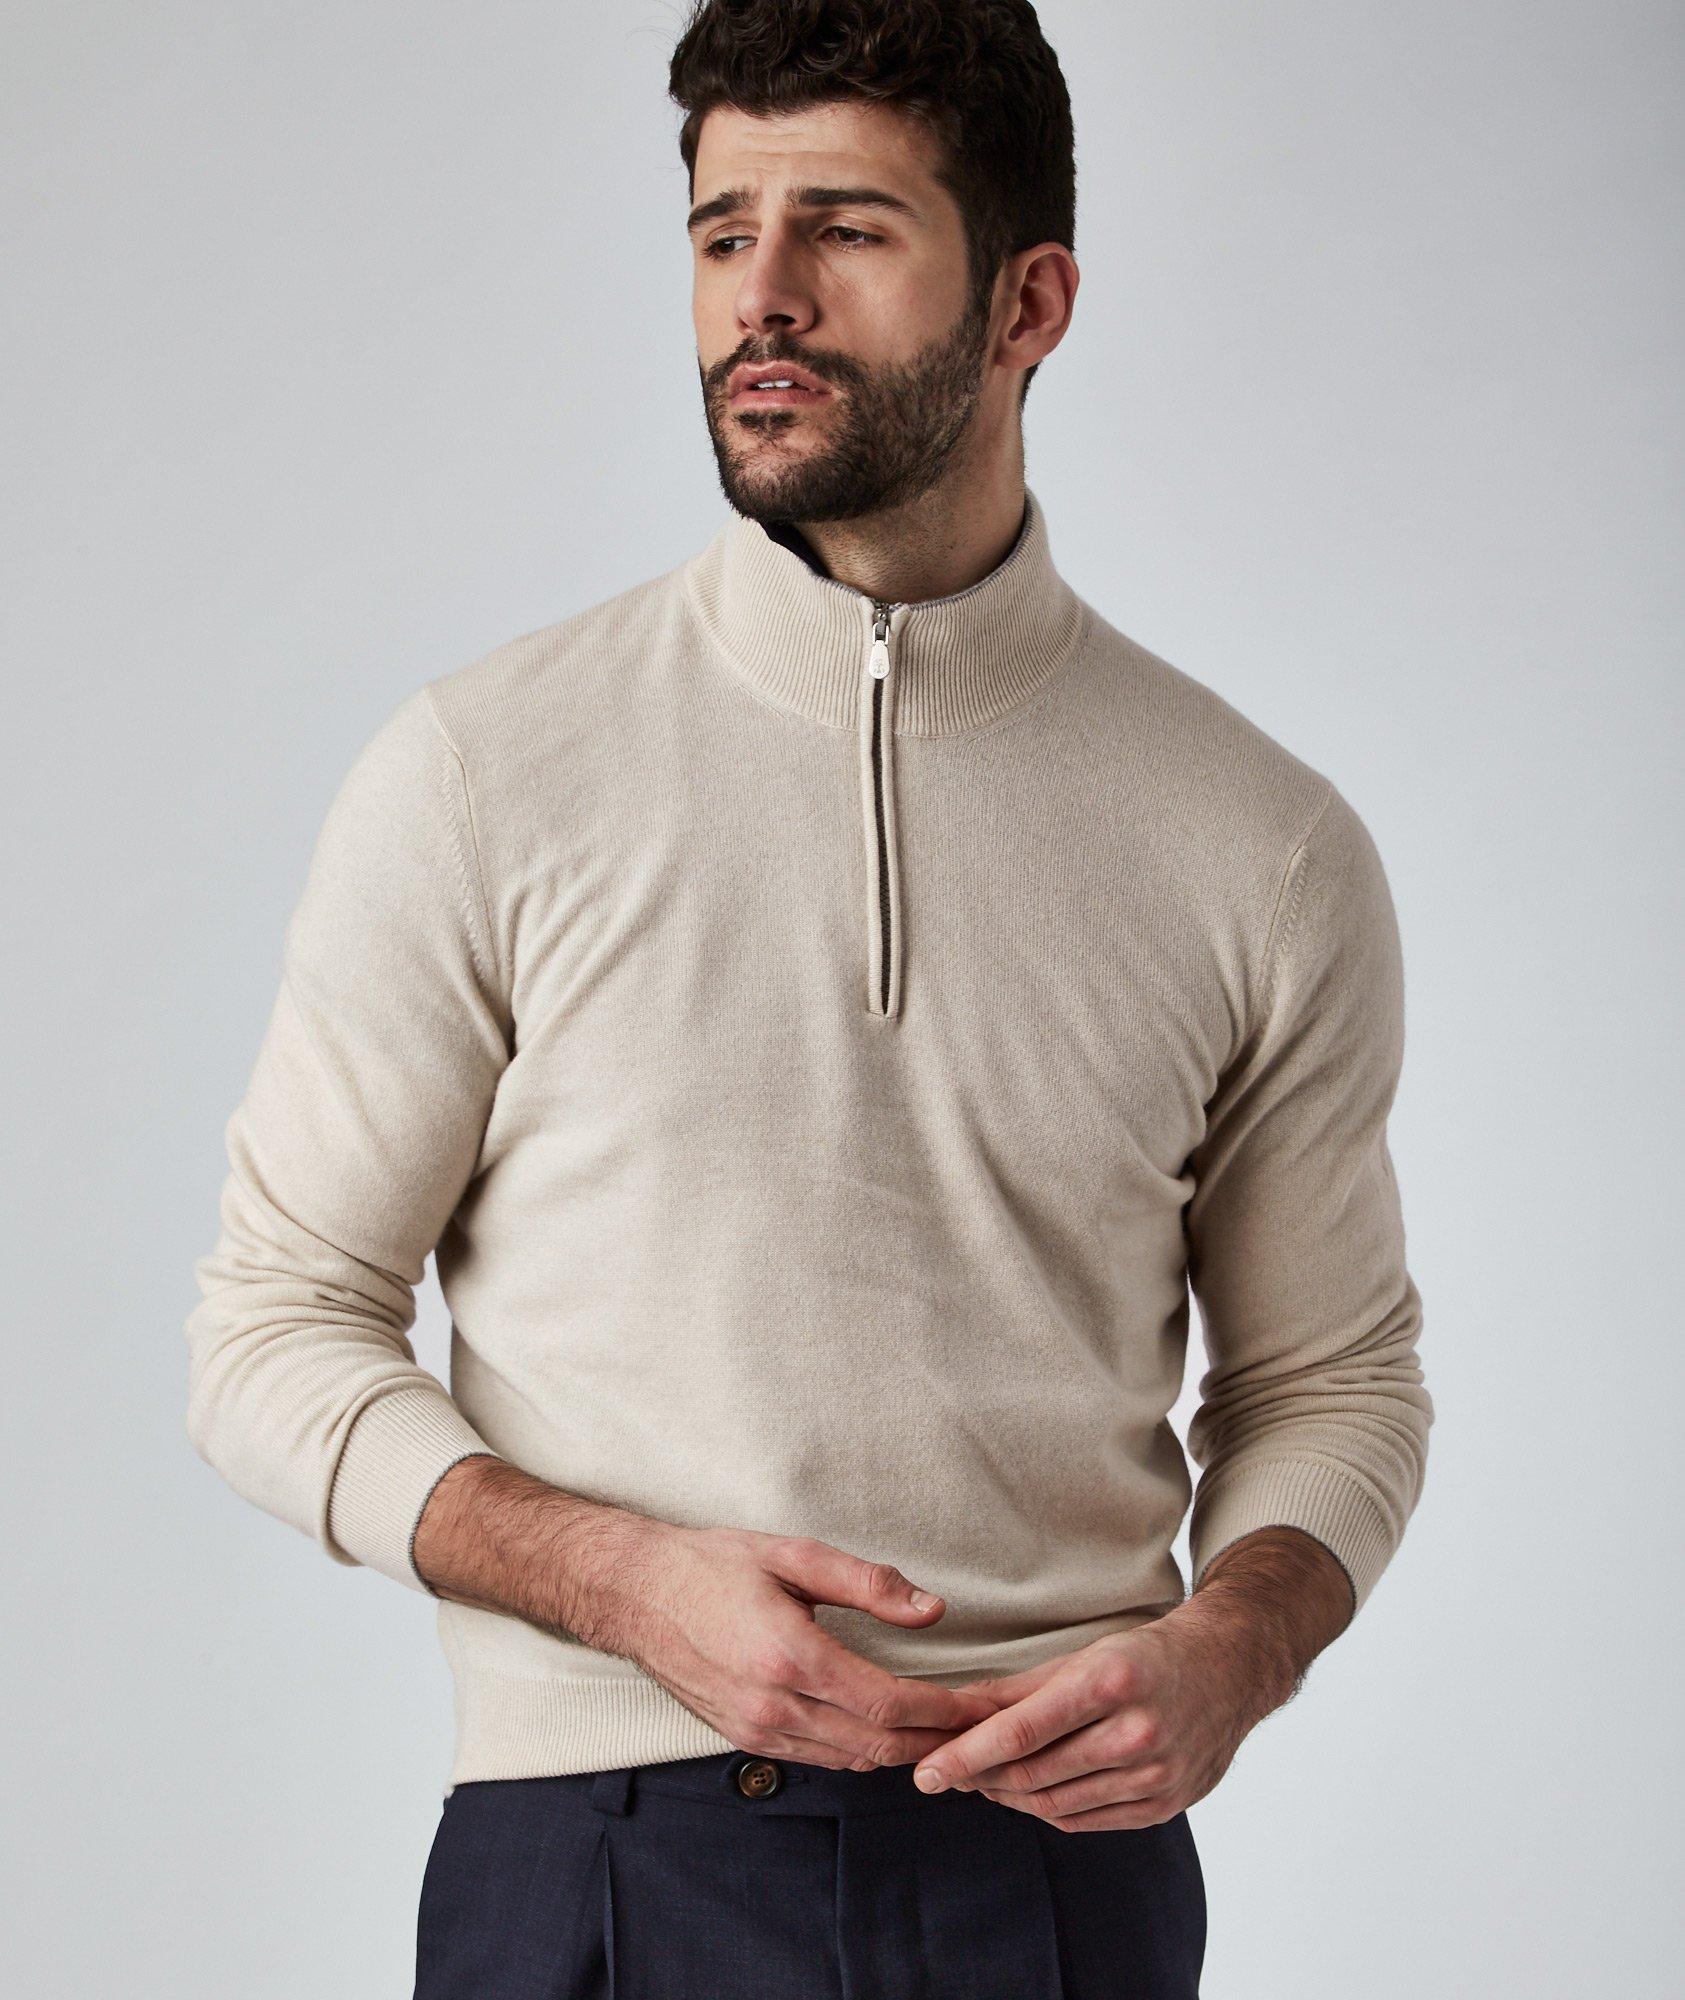 Half-Zip Cashmere Sweater image 0